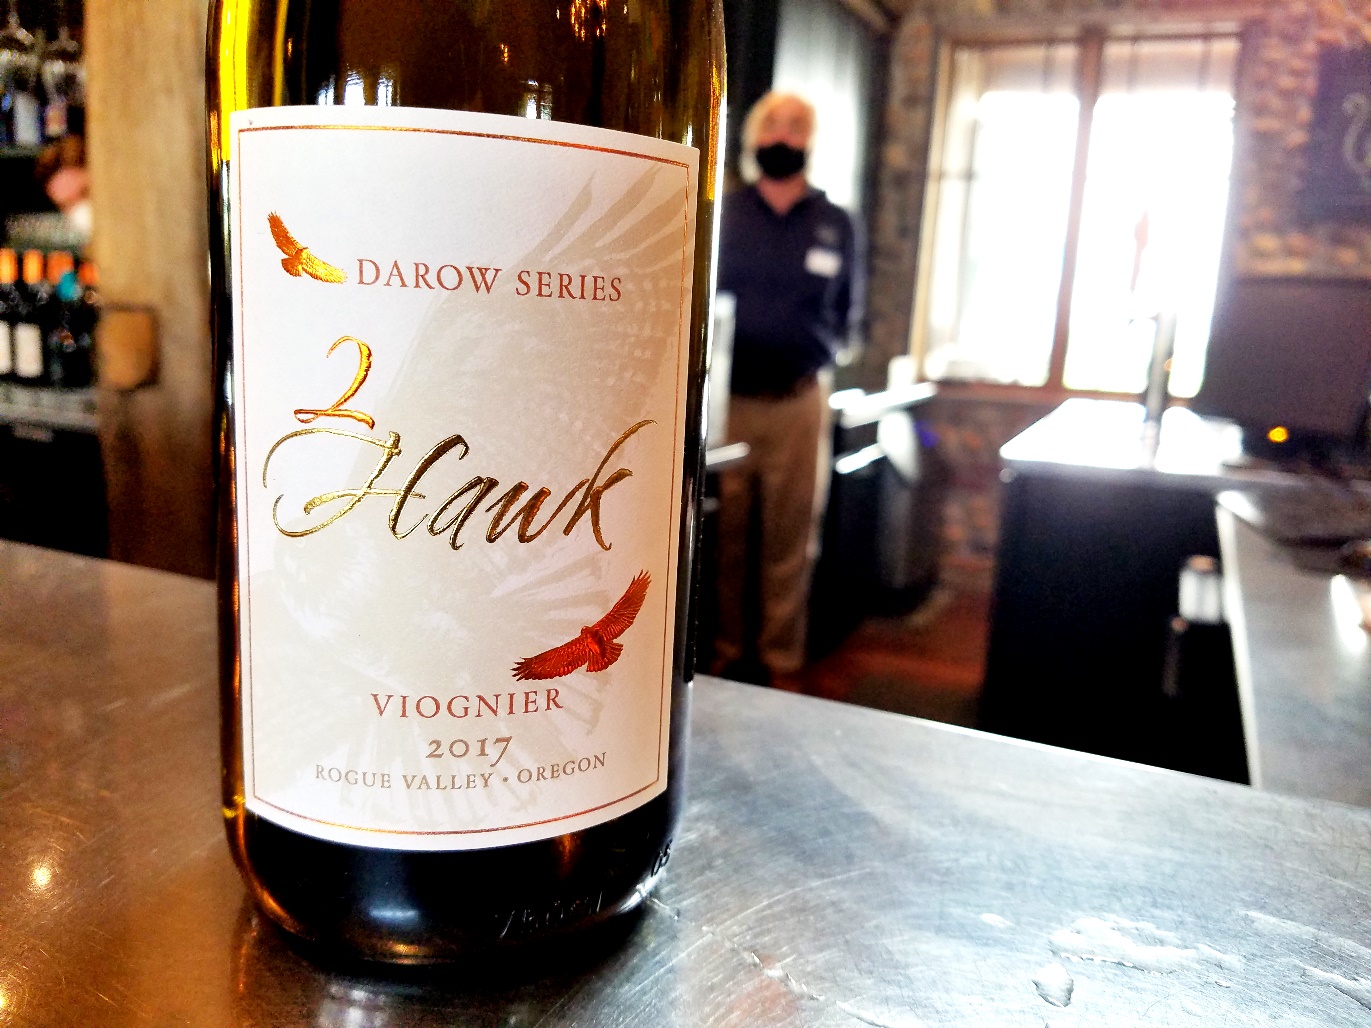 2 Hawk Vineyard & Winery, Darow Series Viognier 2017, Rogue Valley, Oregon, Wine Casual